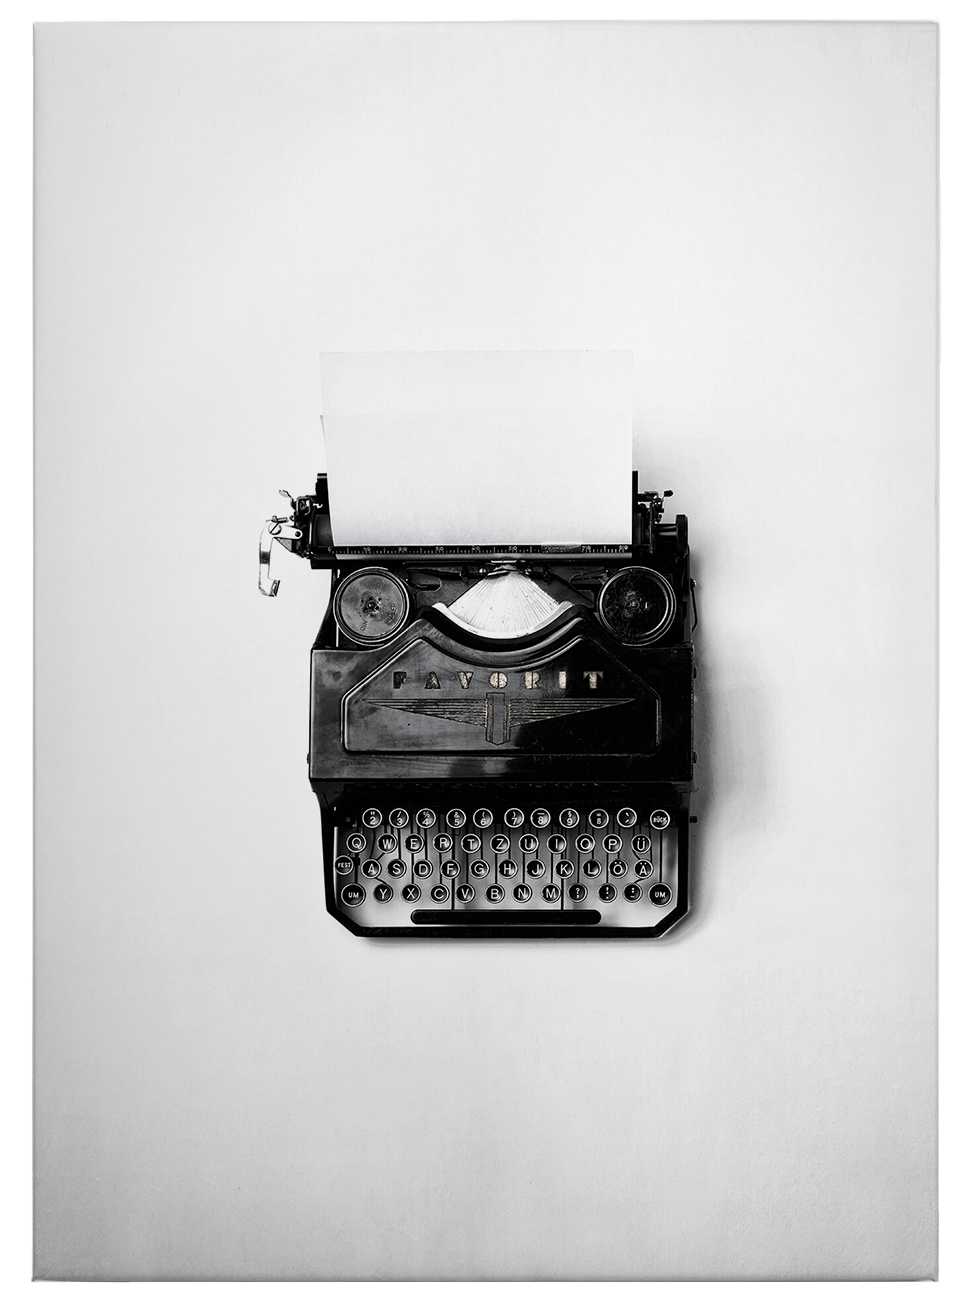             Canvas print typewriter retro design, black and white
        